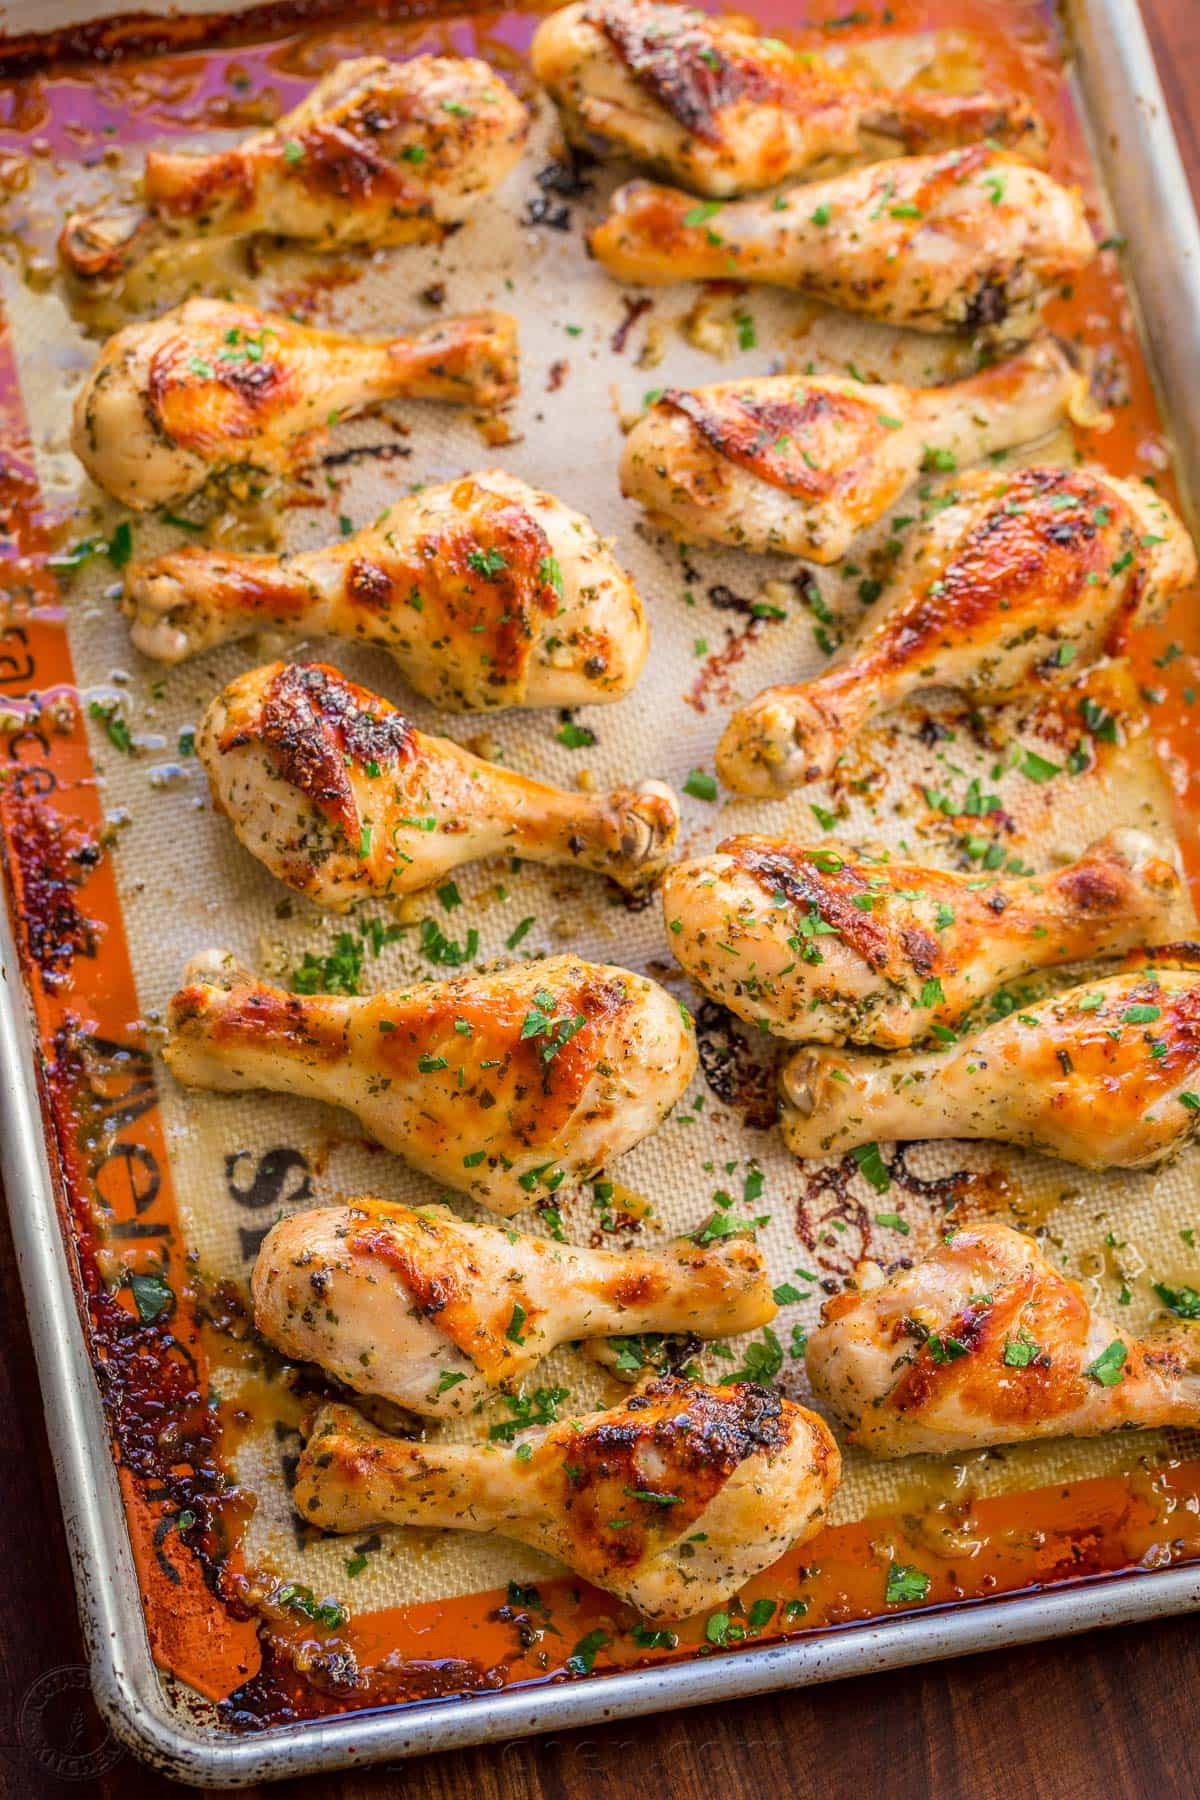 Recipes For Baked Chicken
 Baked Chicken Legs with Garlic and Dijon NatashasKitchen